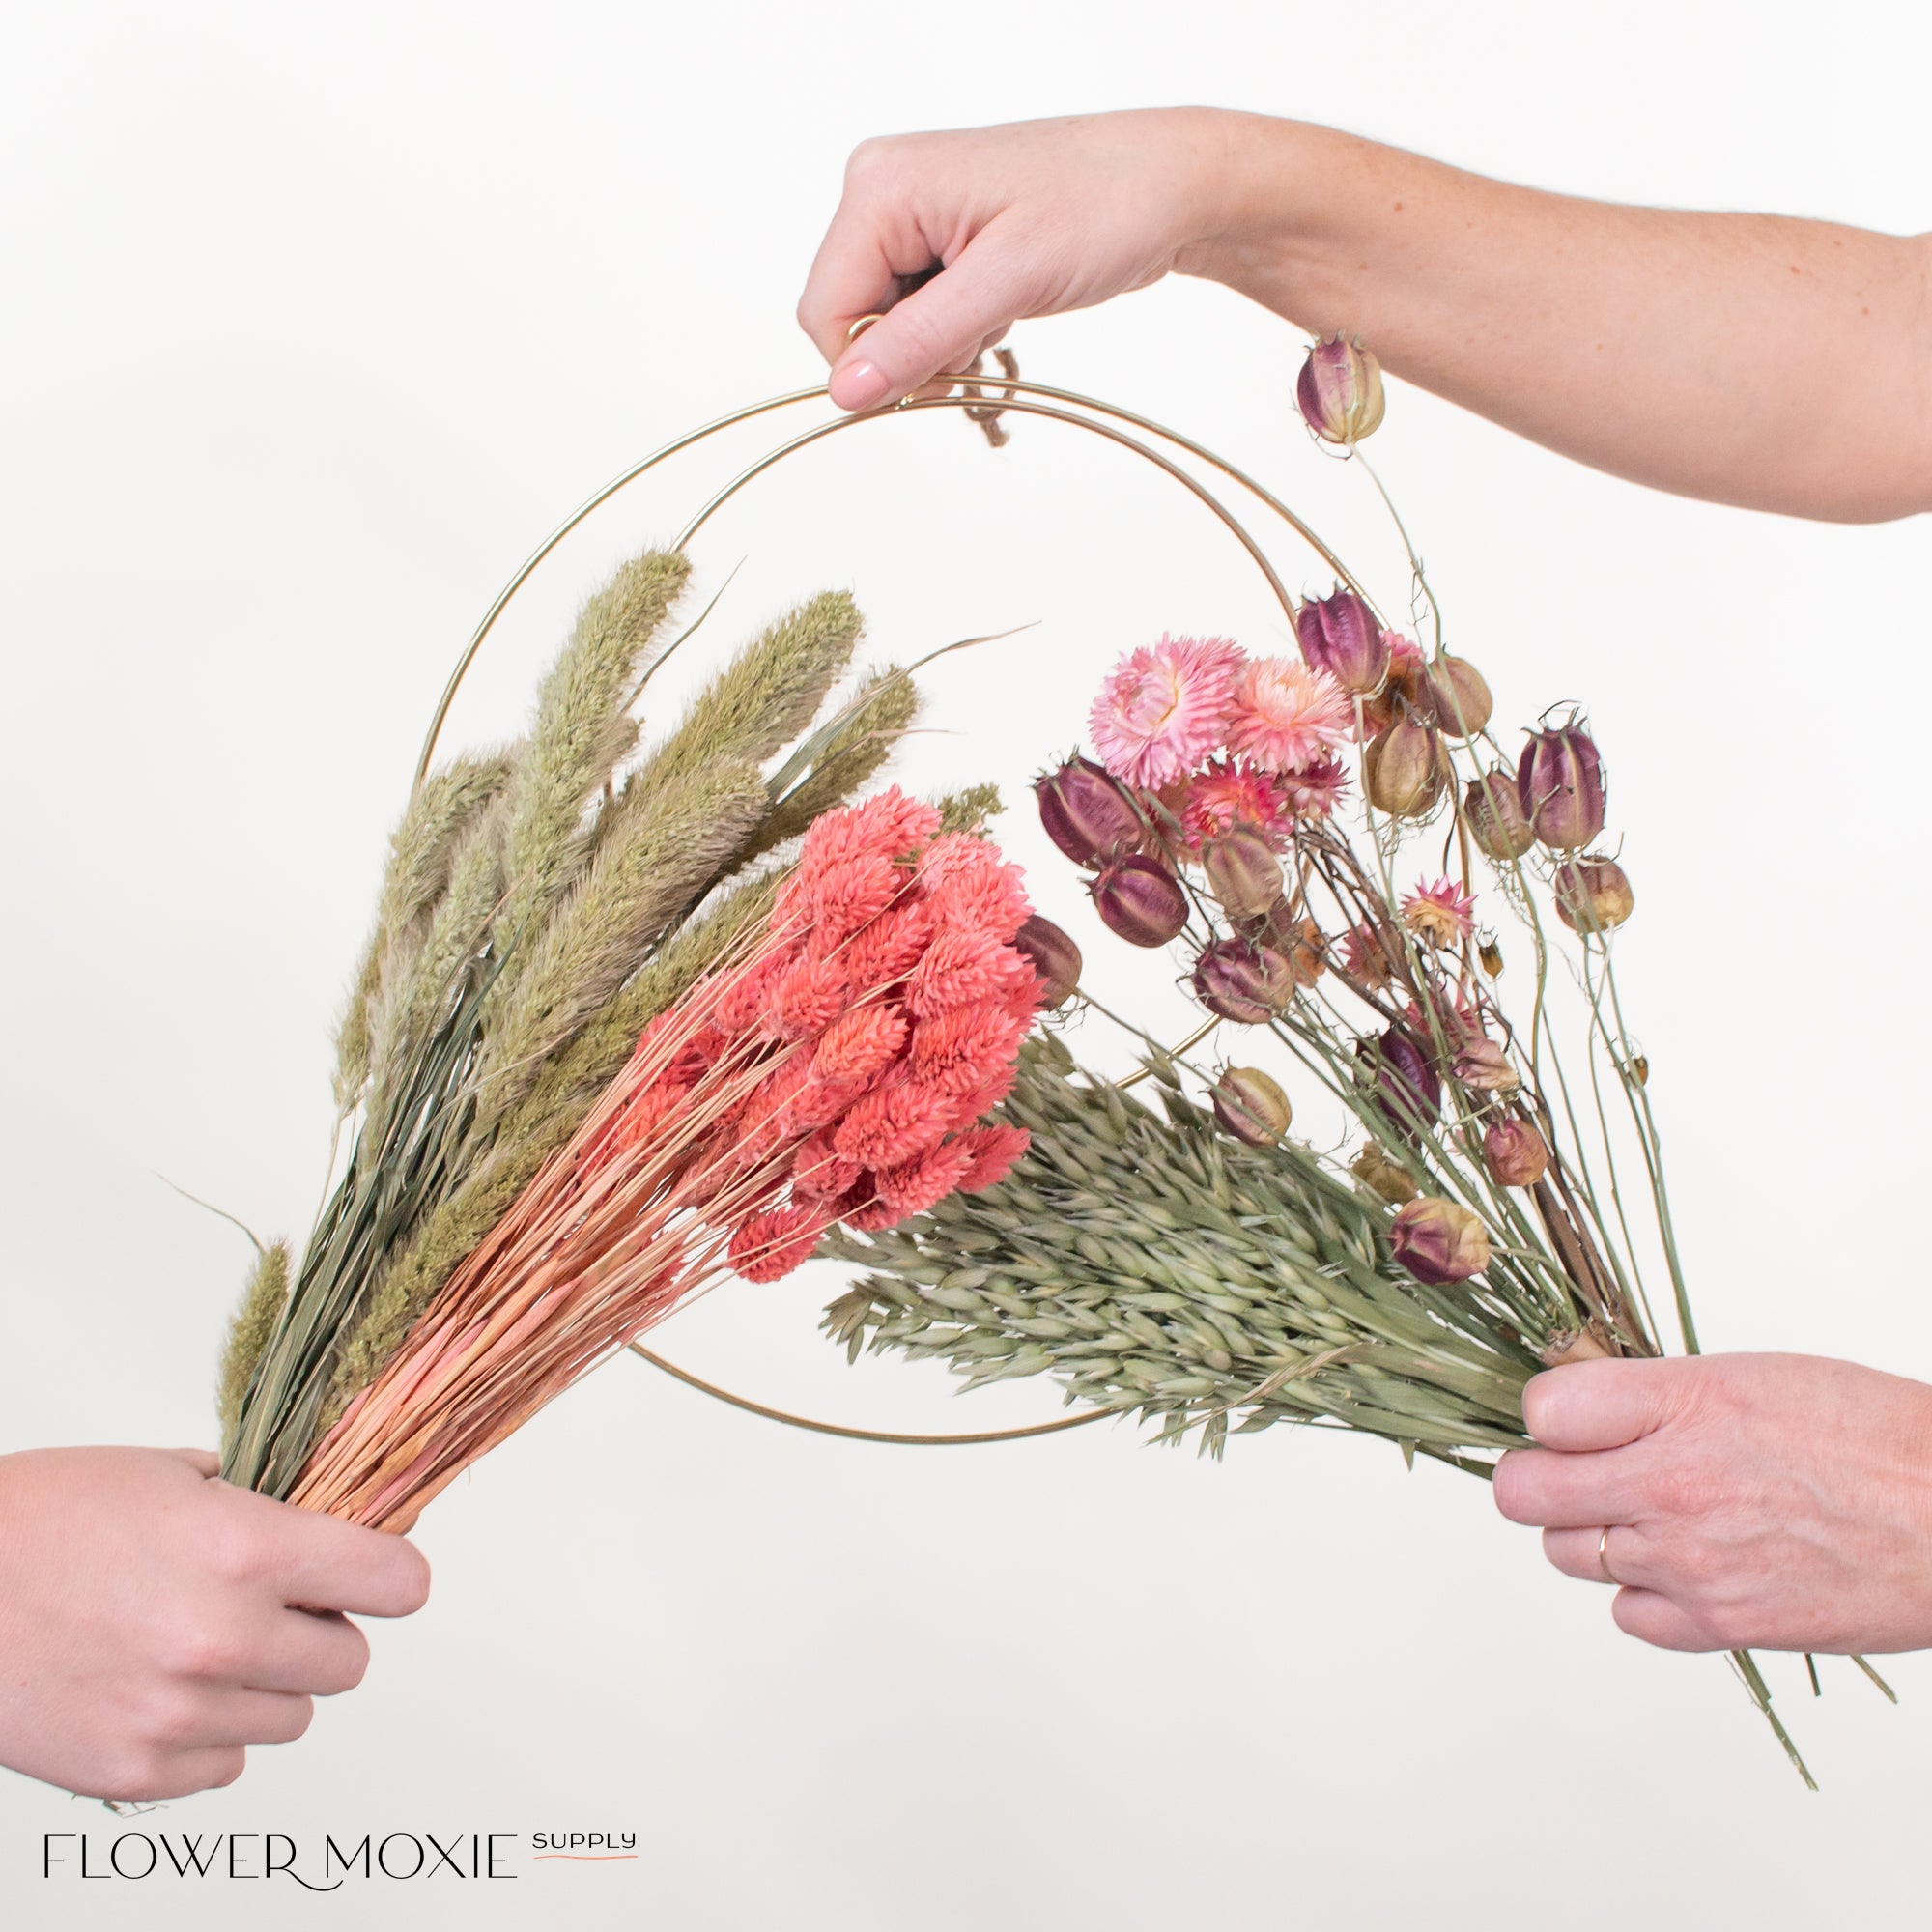 Processing Wholesale Flowers - DIY Flower Design, Tutorials & Supplies